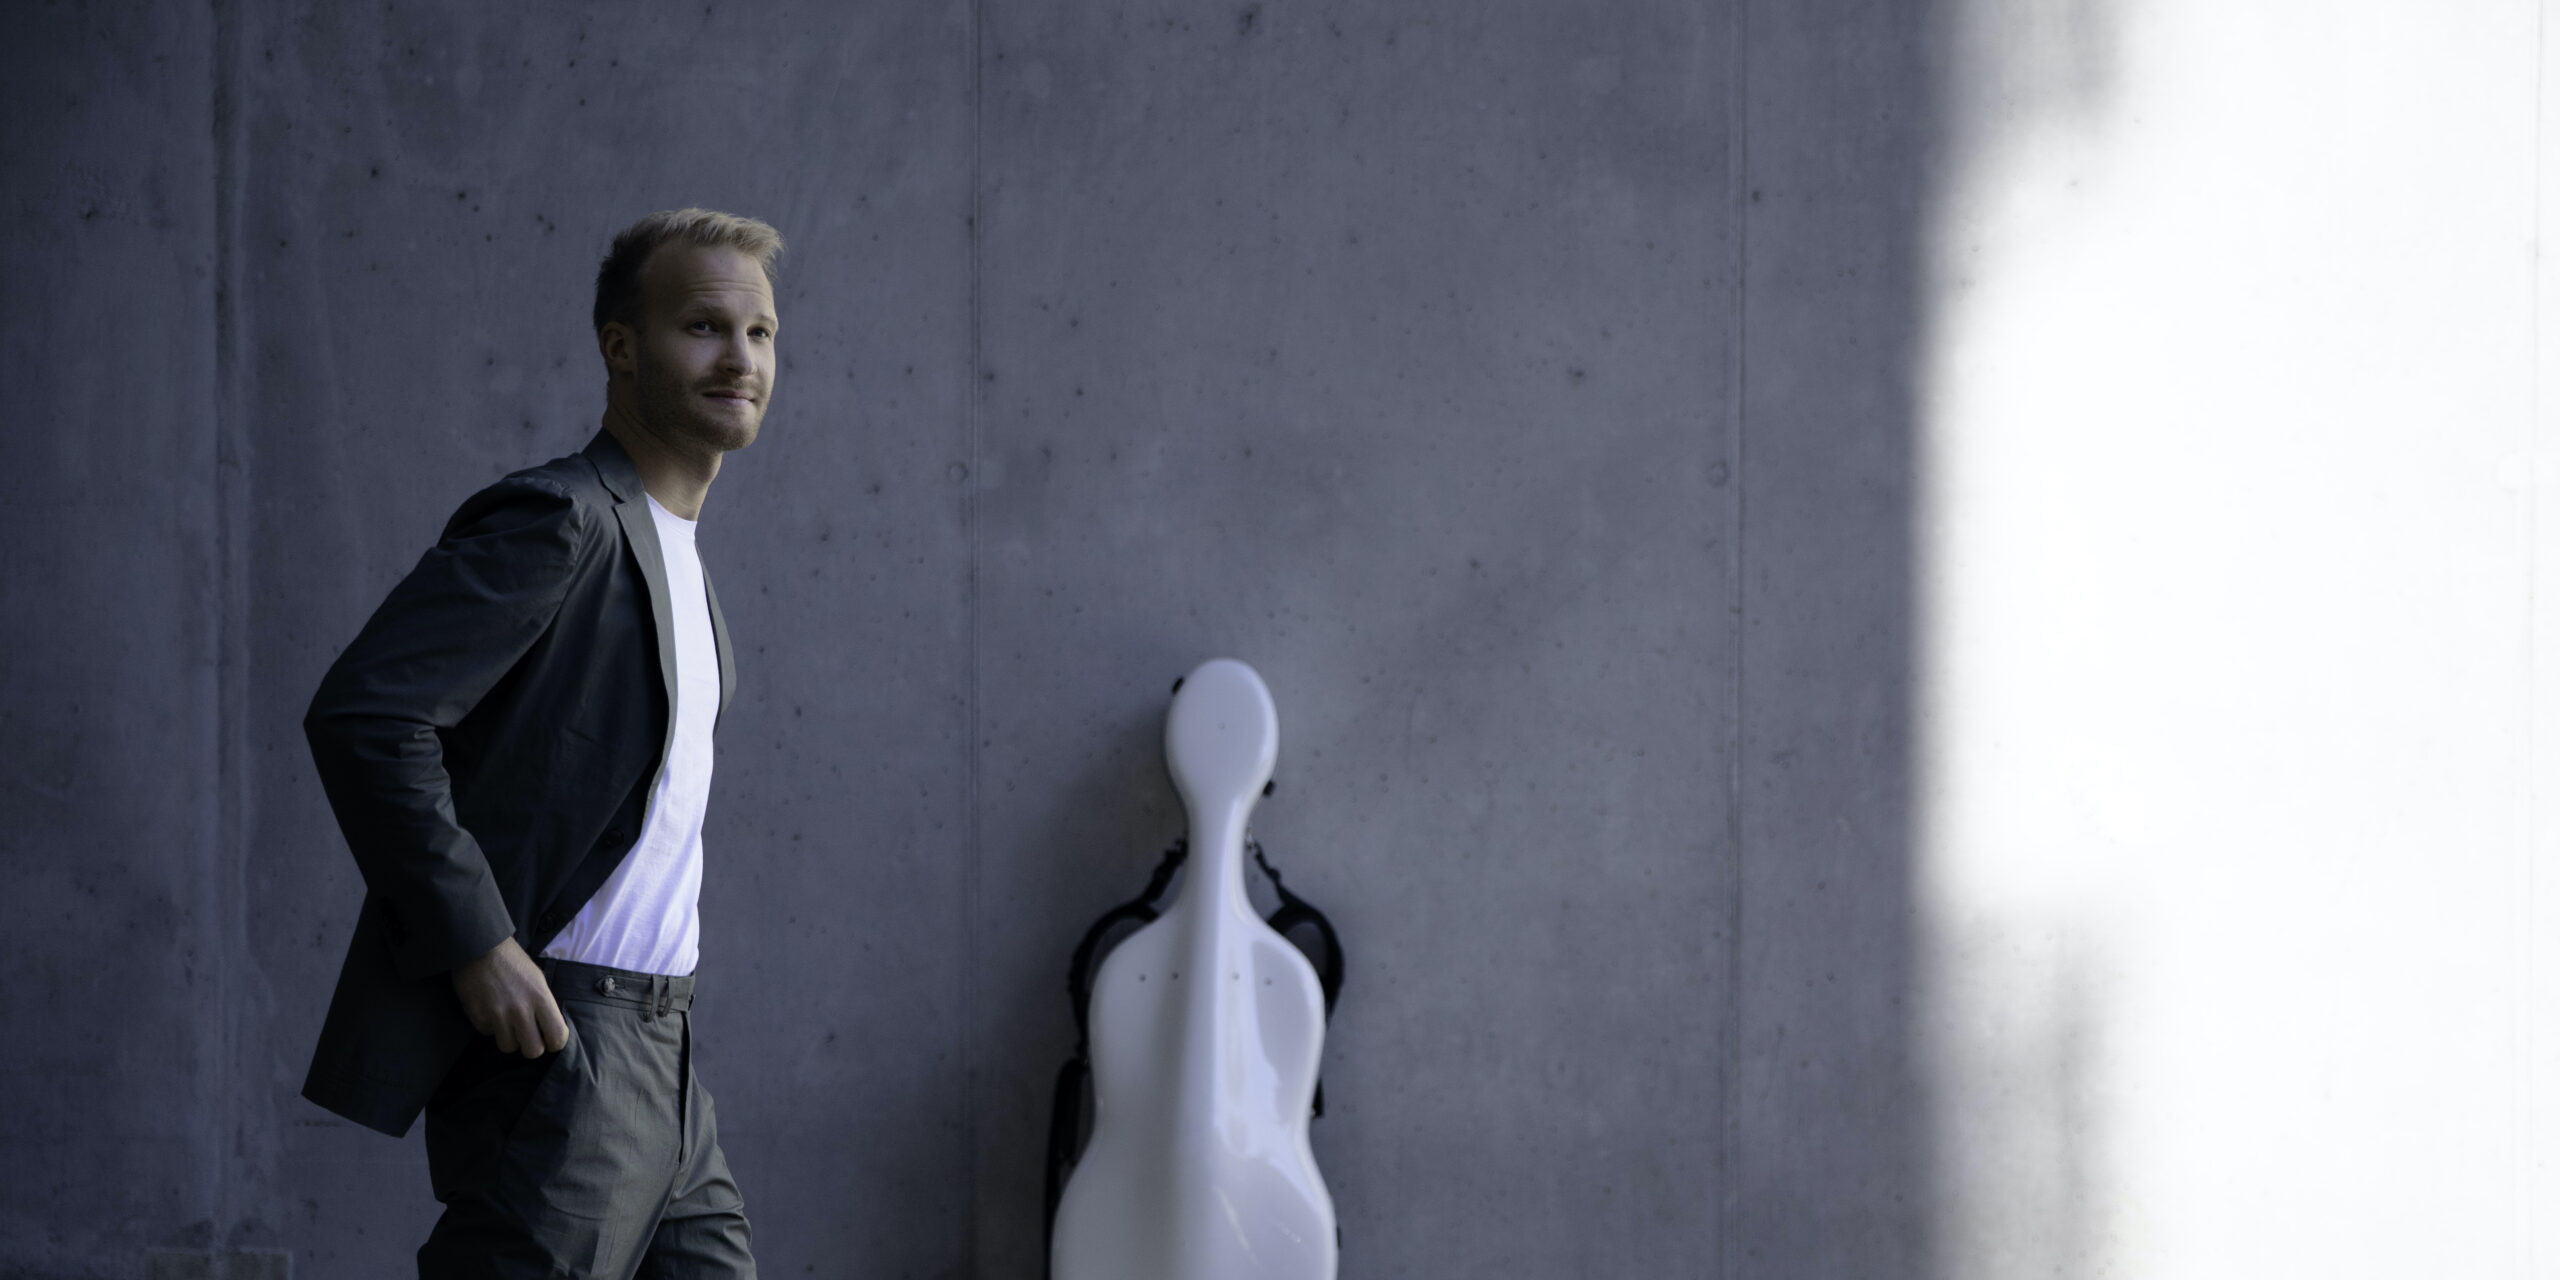 Zoltan Despond, violoncelliste suisse